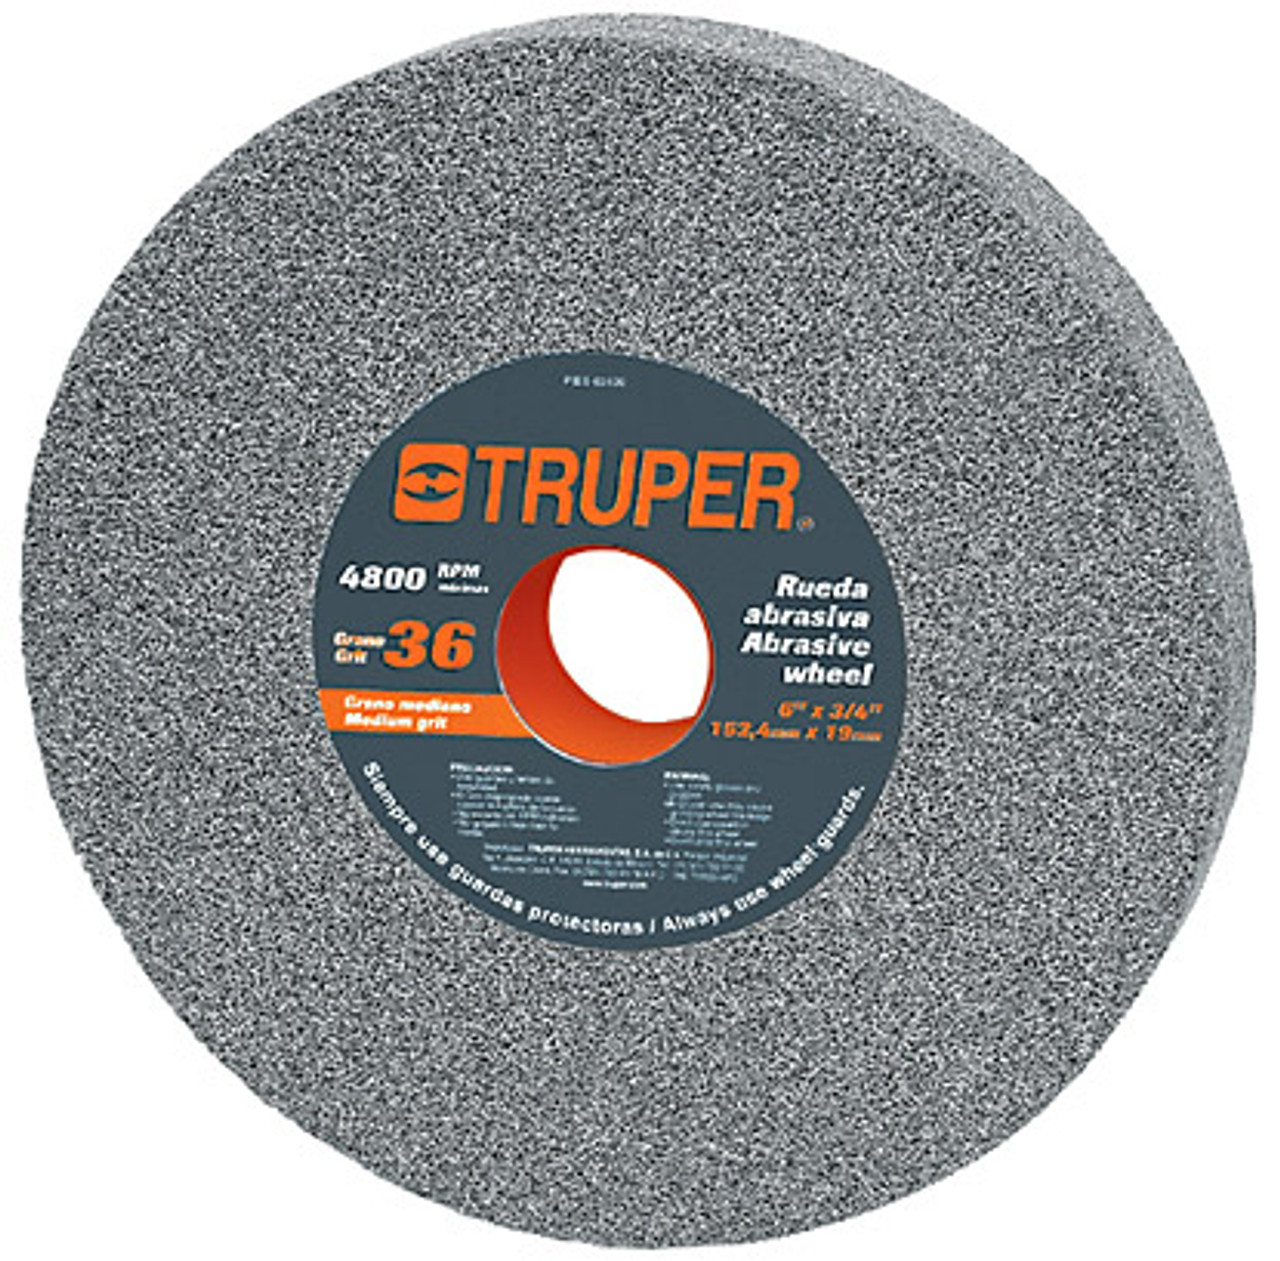 Truper 6x1" Grain 36 Aluminium Grinding Wheel #16381